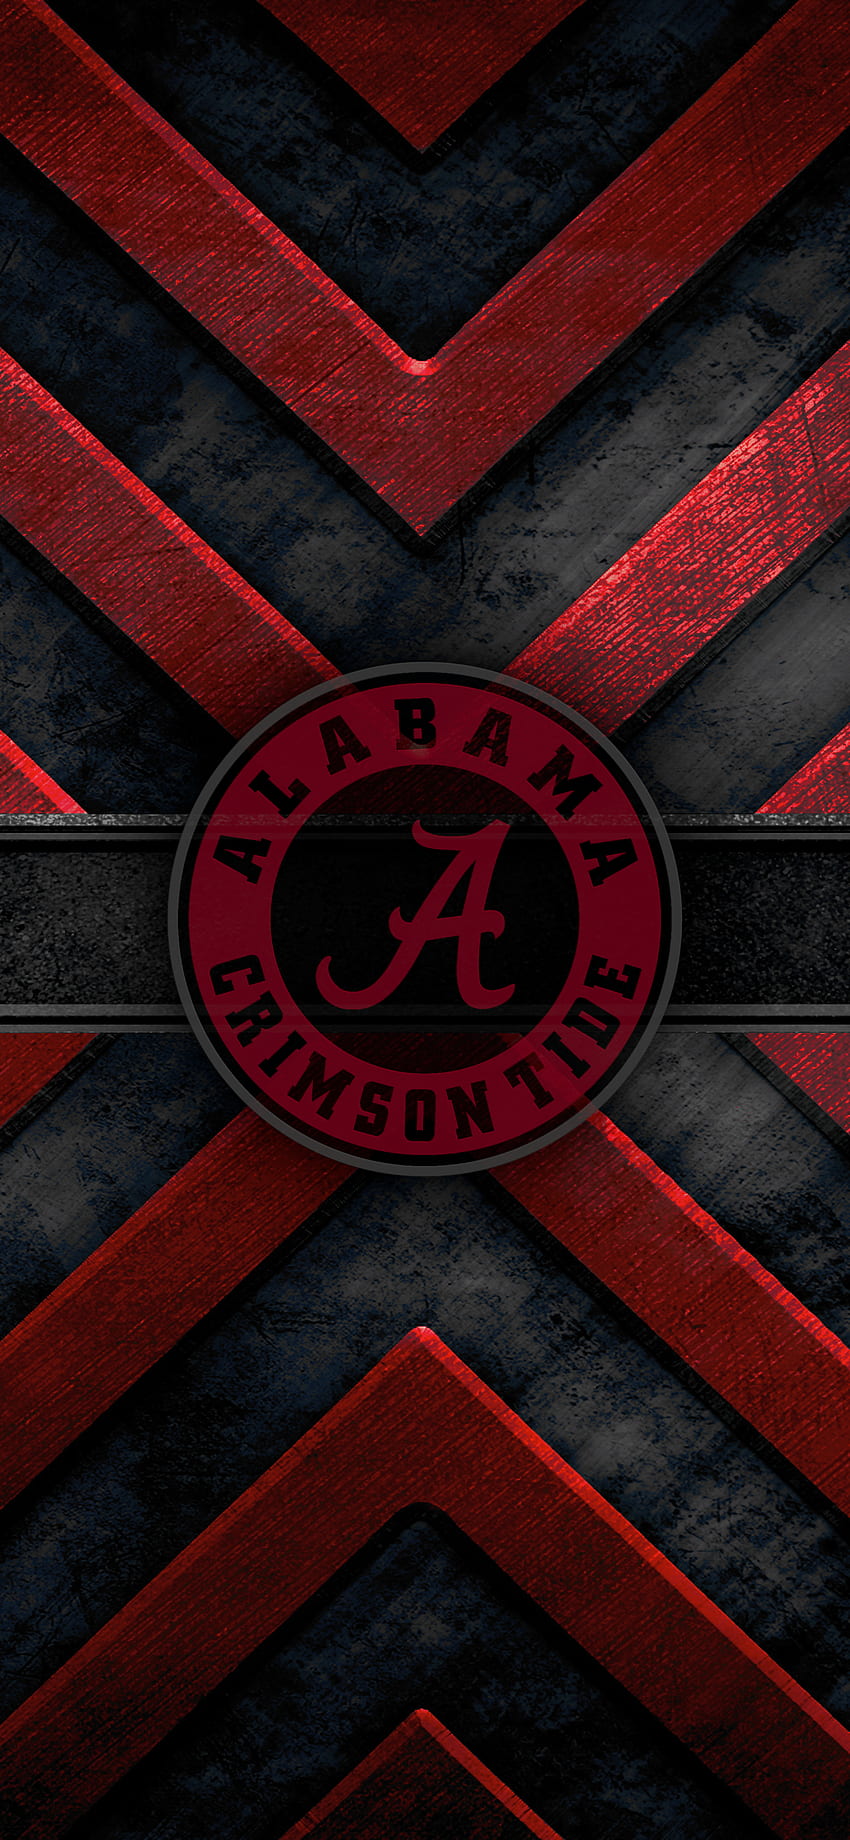 metal bama. Logotipo de marea carmesí de Alabama, fútbol de marea carmesí de Alabama, marea carmesí de Alabama fondo de pantalla del teléfono